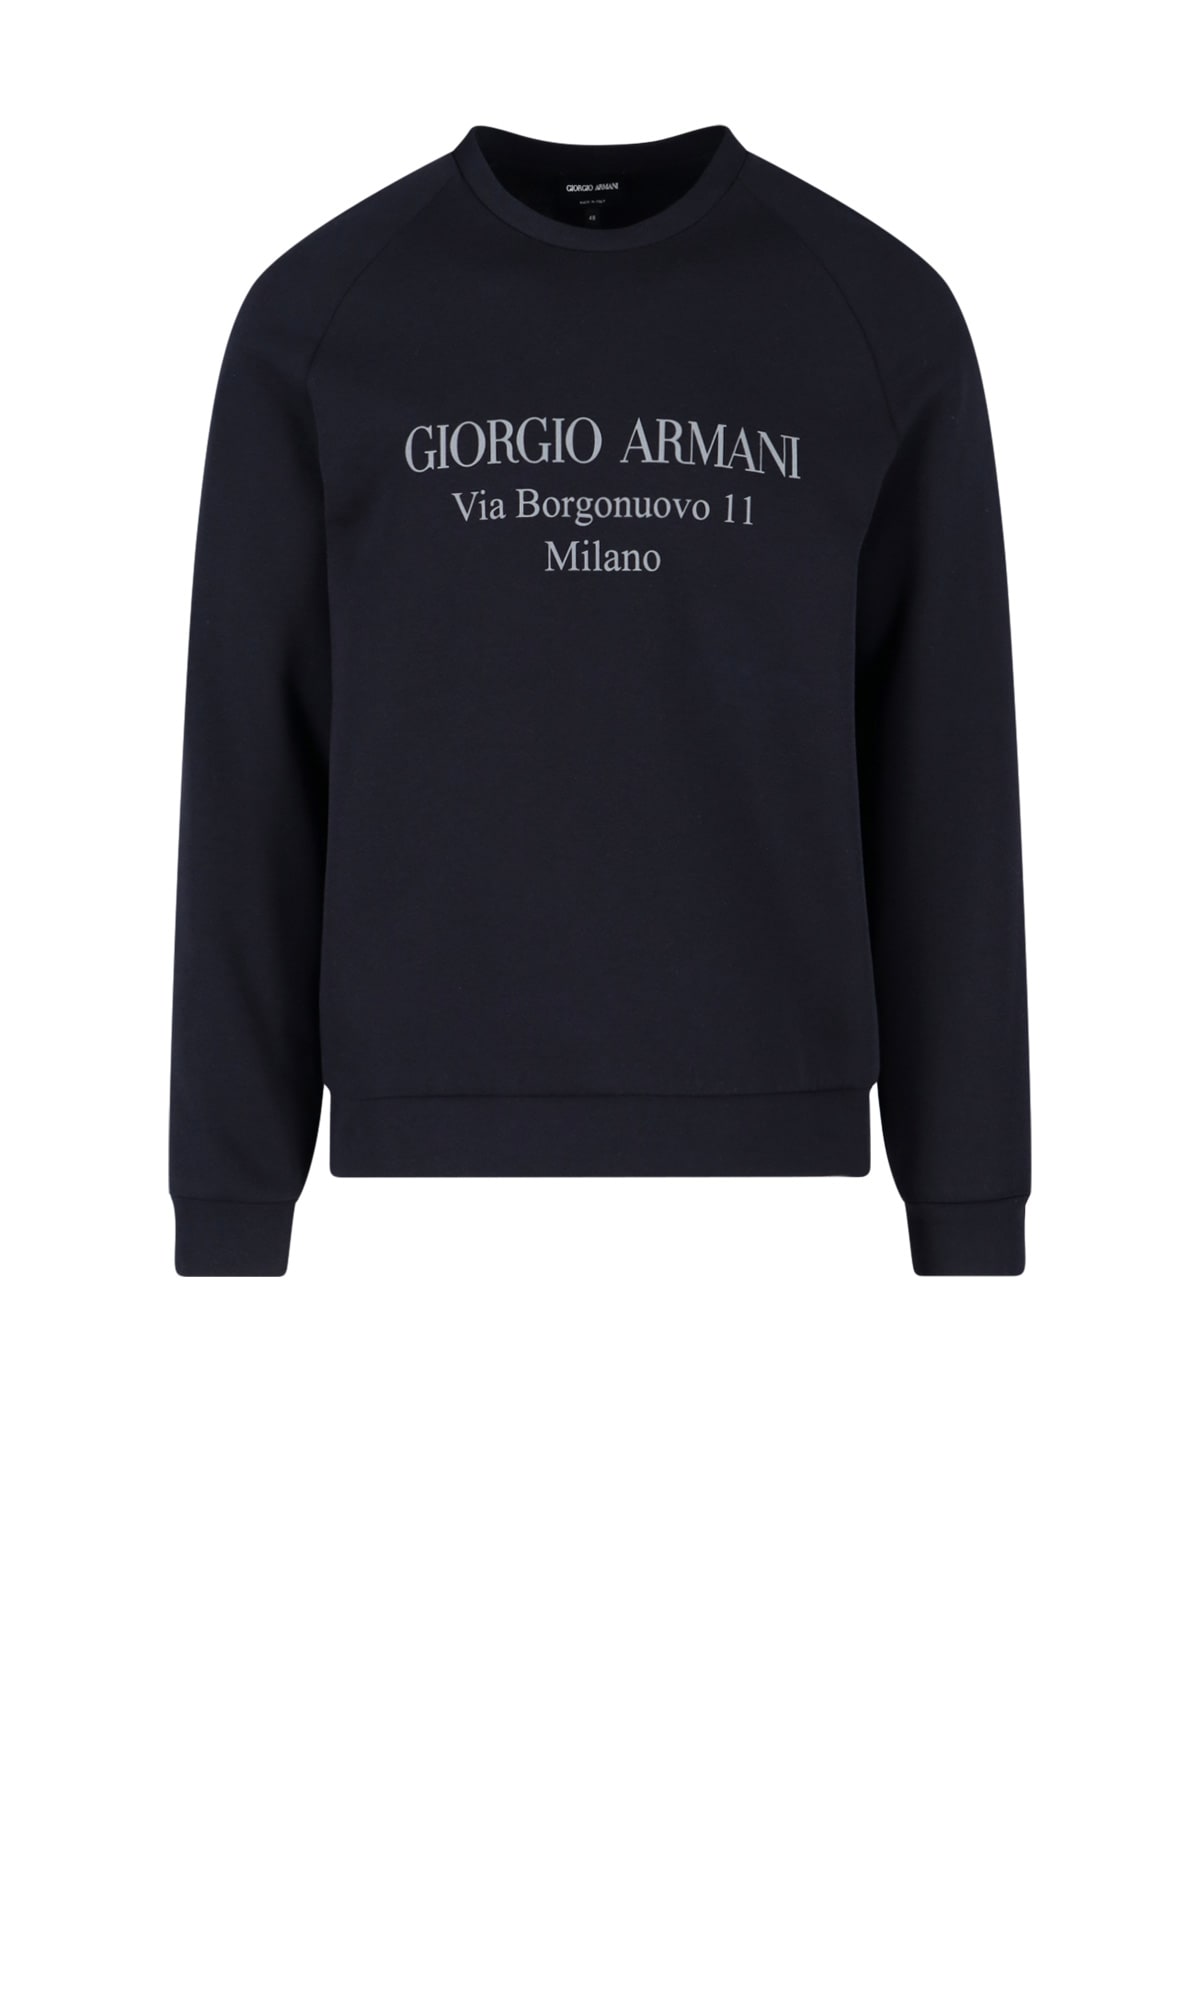 Giorgio Armani Sweater